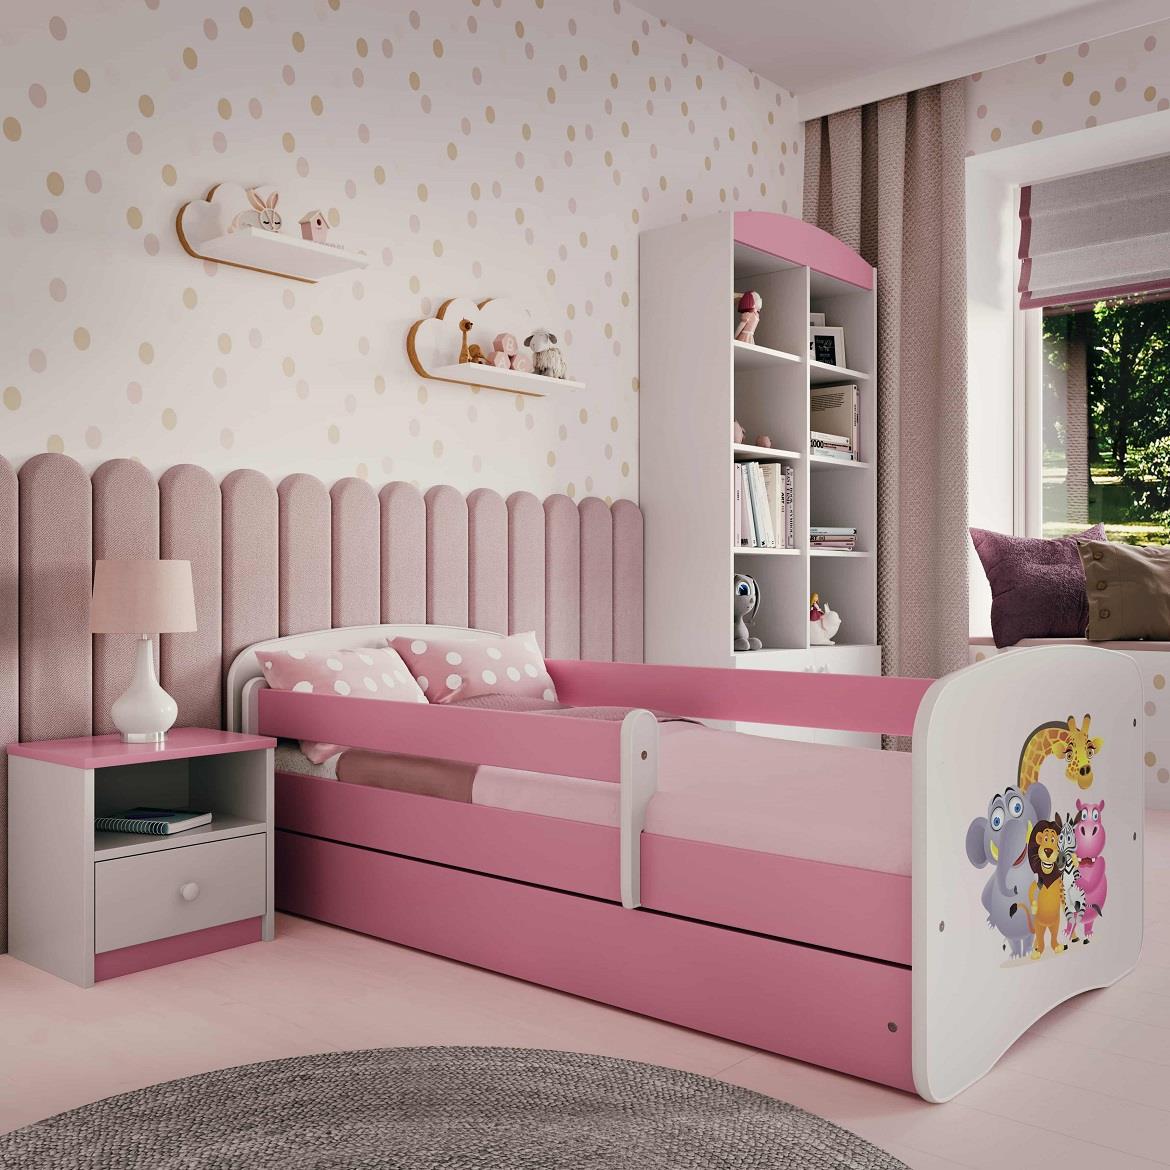 Babydreams krevet+podnica+dušek 90x184x61 cm beli/roze/print zoo